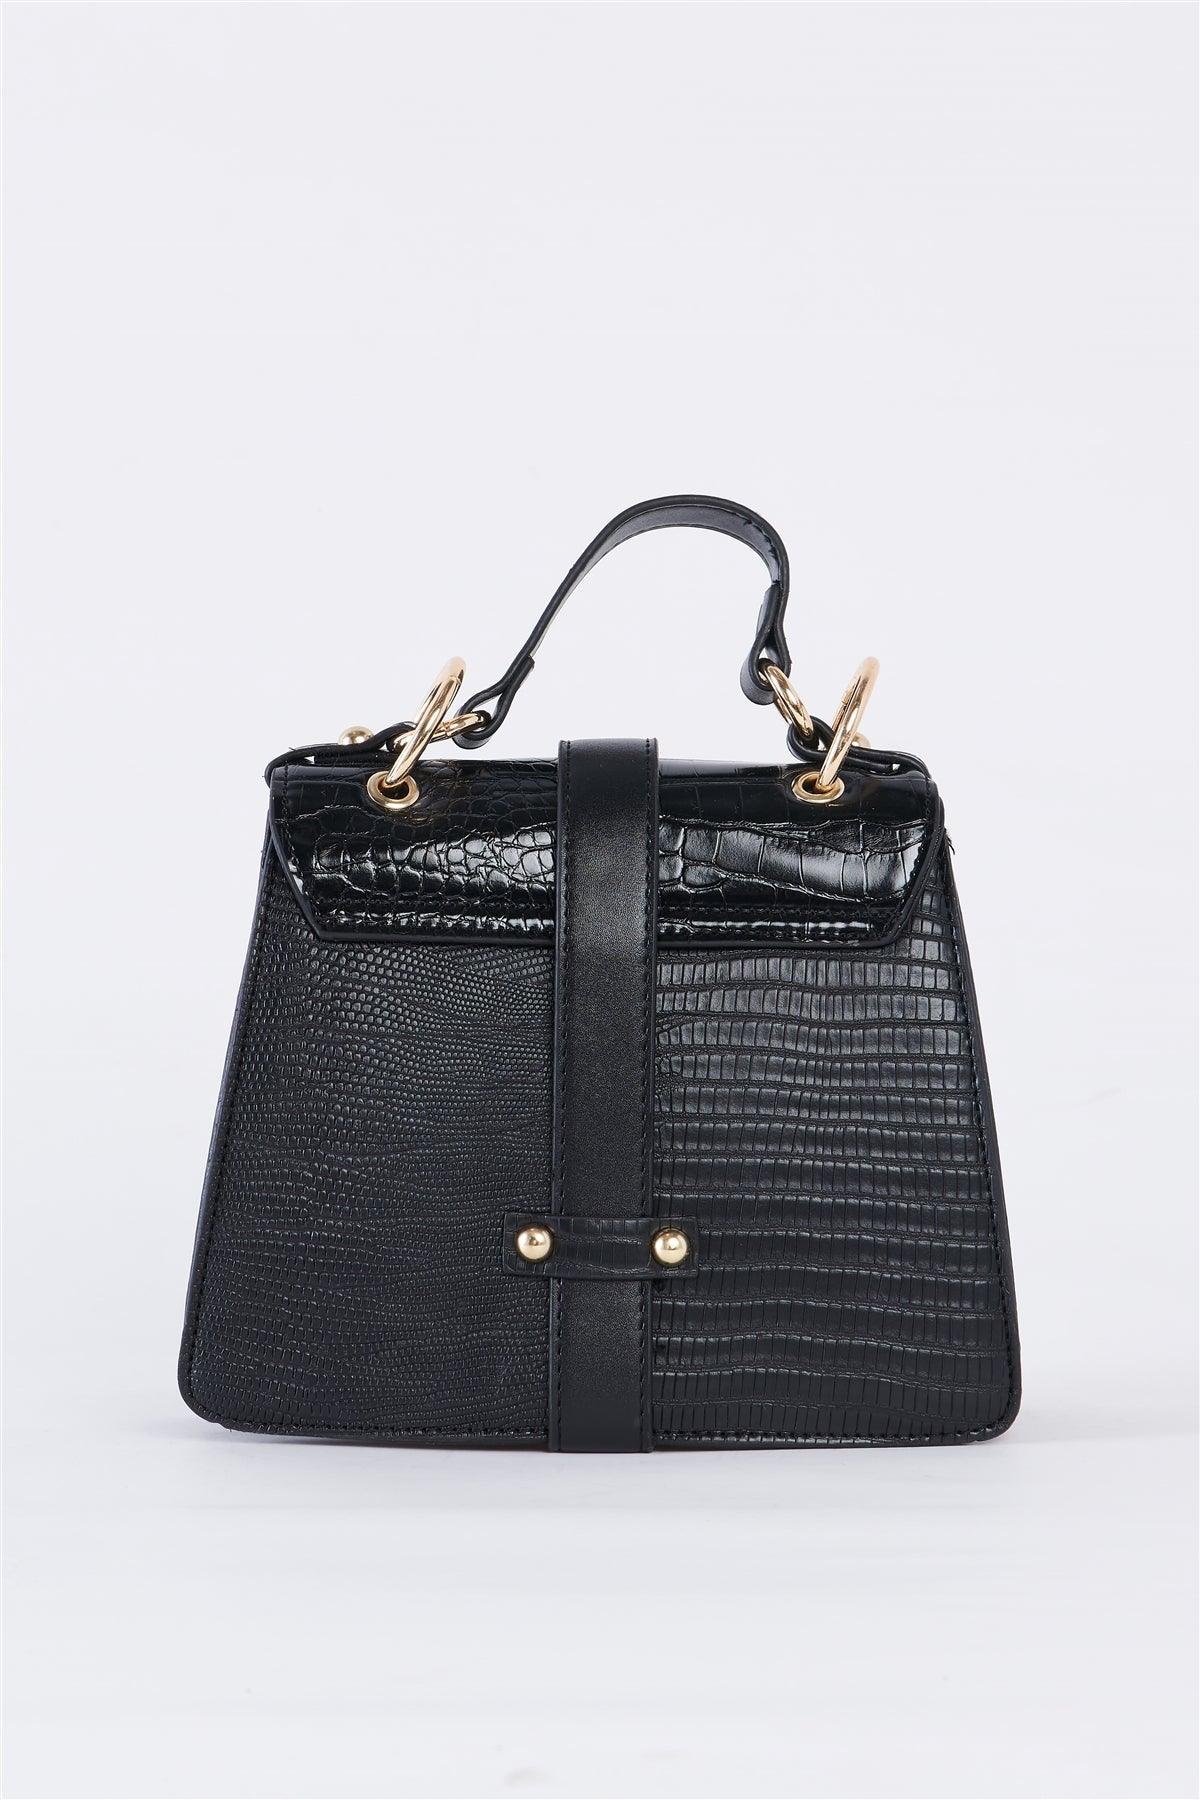 Black & Ivory Retro Inspired Alligator Vegan Leather Bag /3 Bags